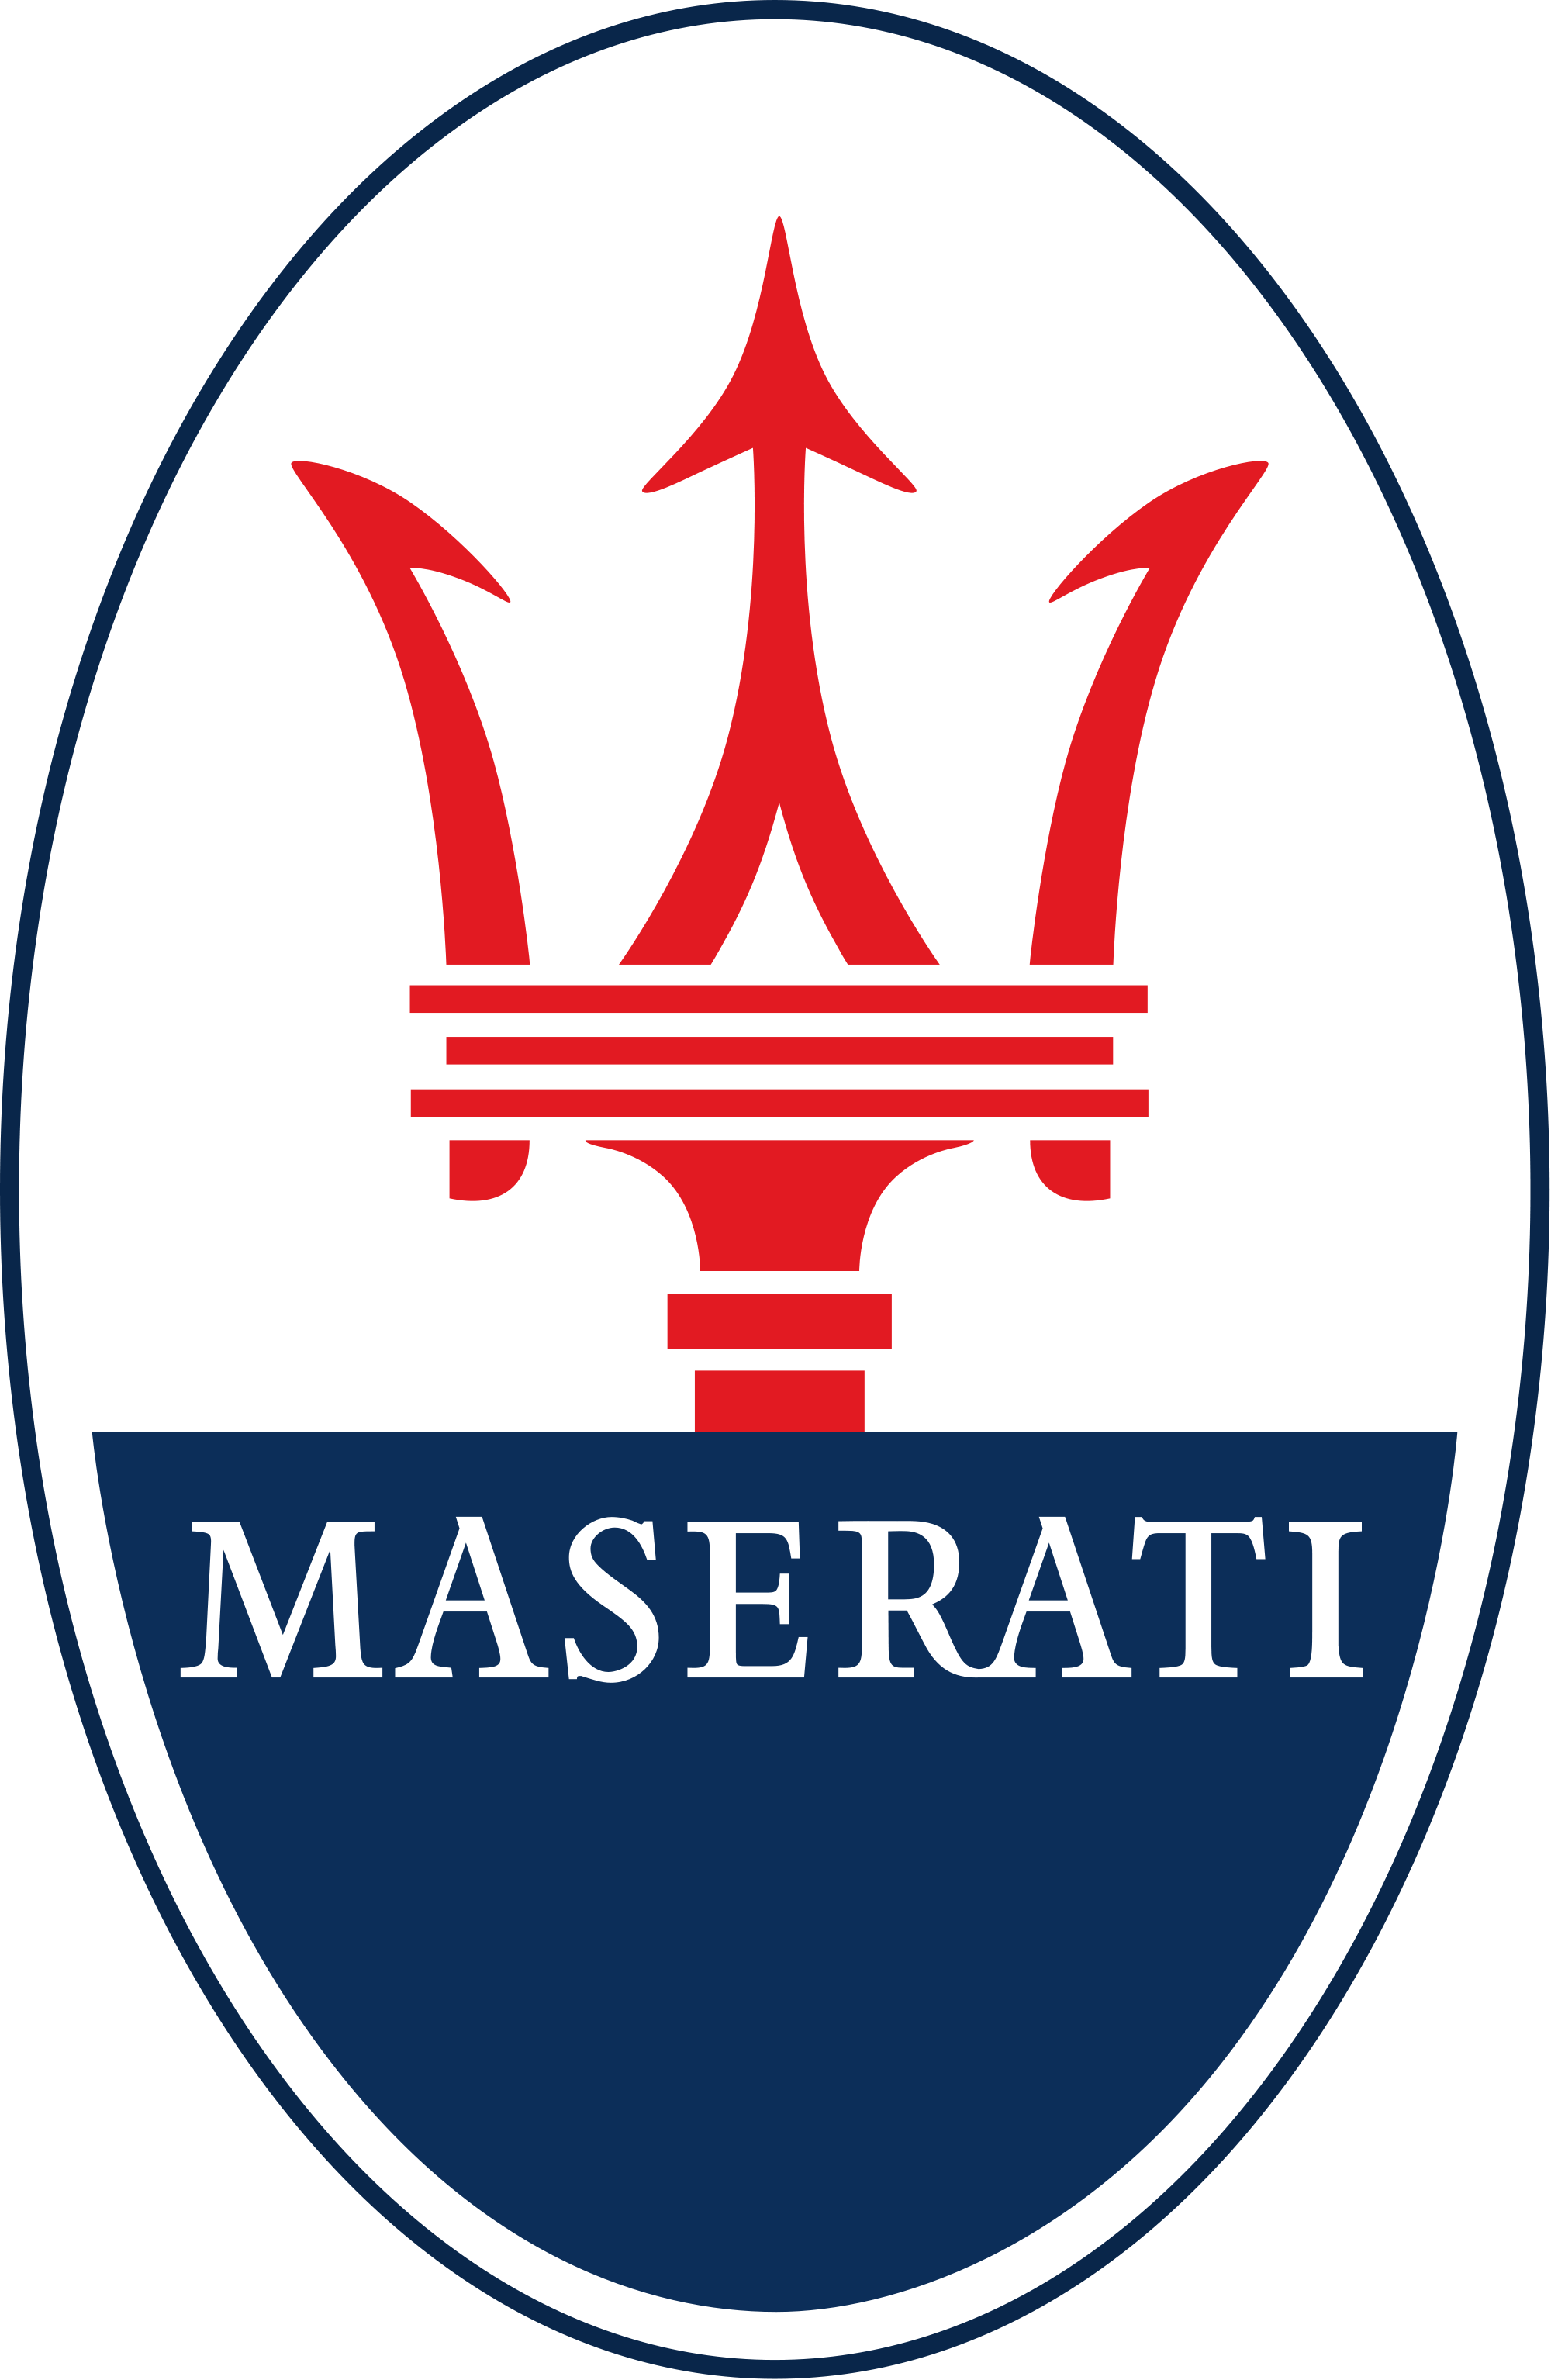 玛莎拉蒂(Maserati)